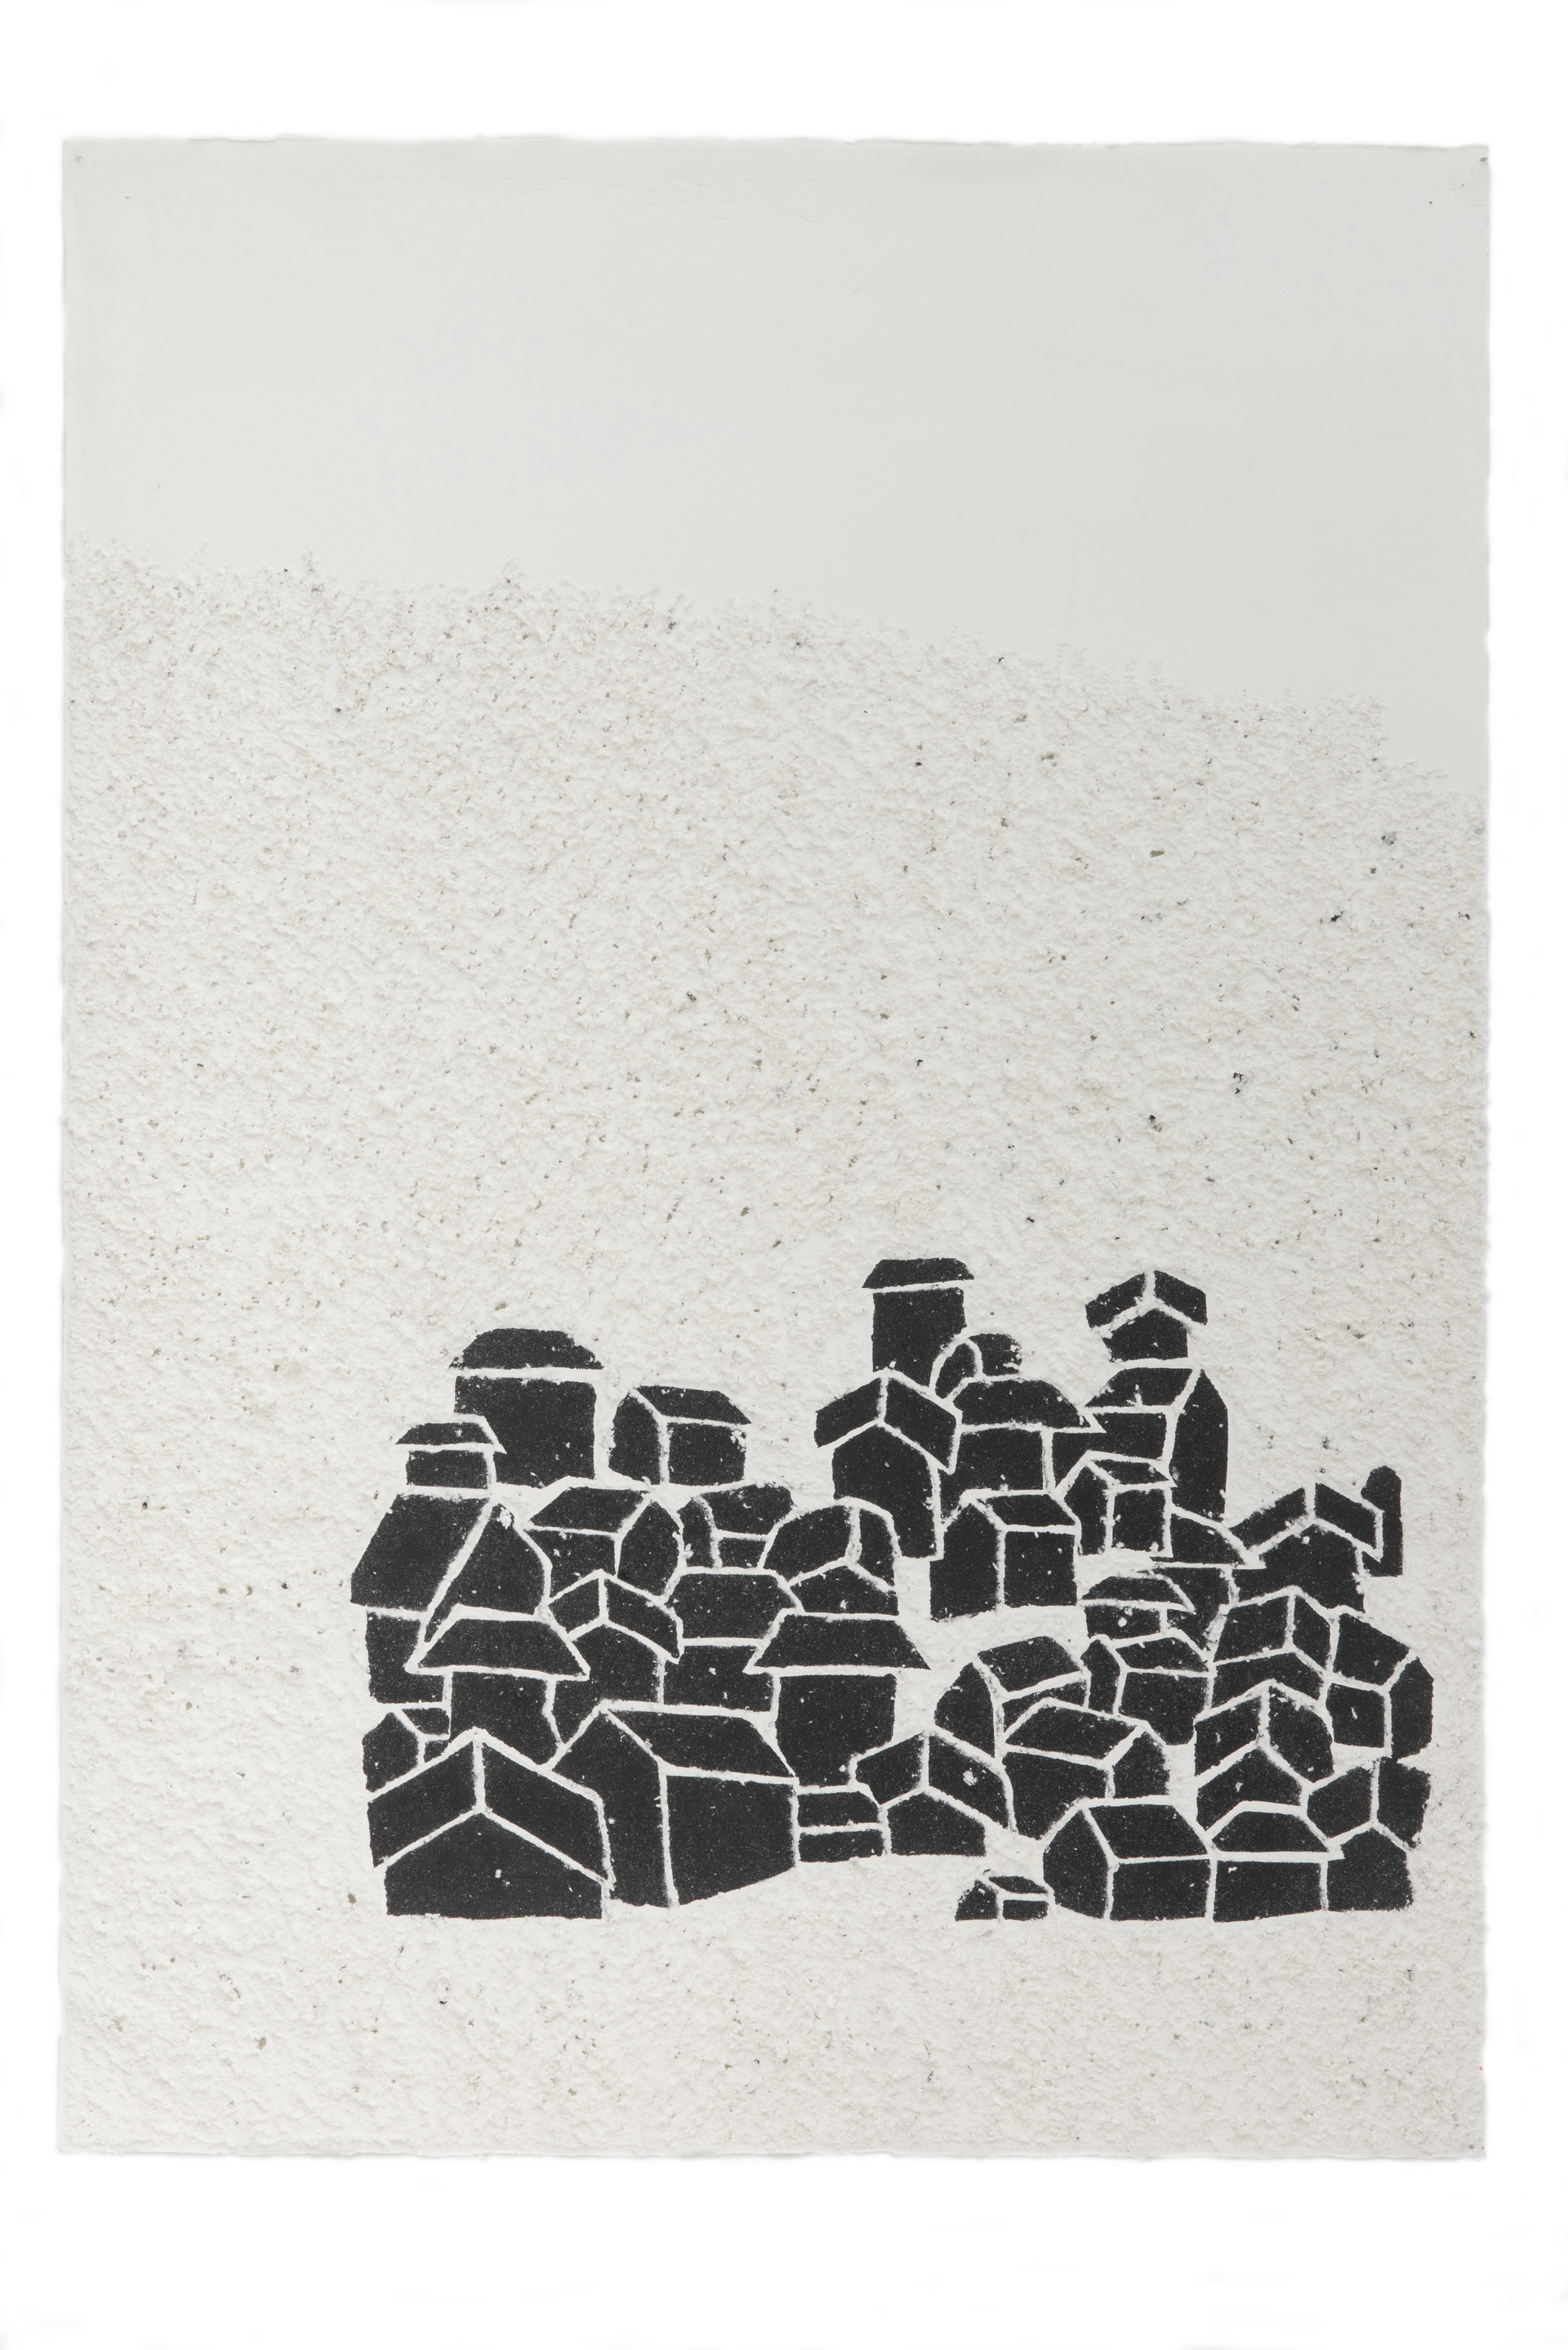 Labor & Effectiveness, Acrylic on paper, 53×78cm, 2018